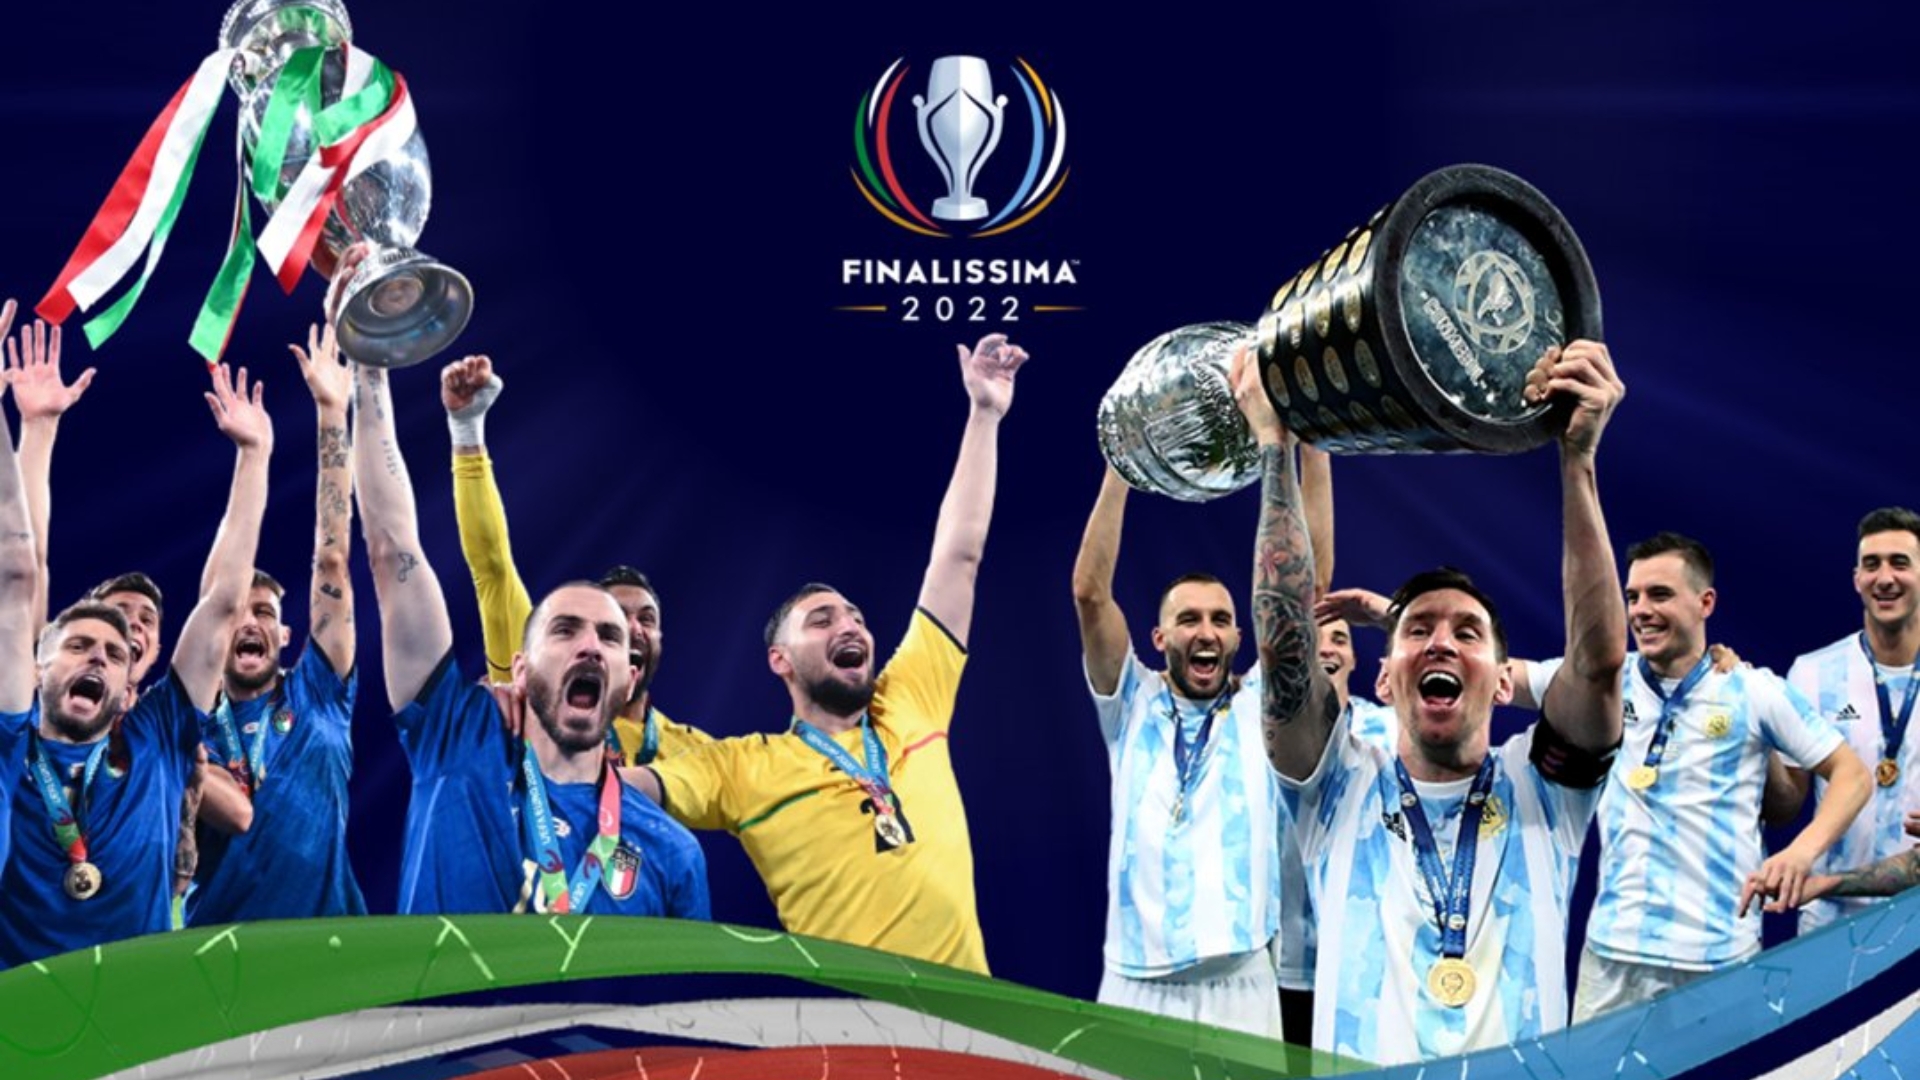 Аргентина сколько раз чемпион по футболу. Финалисимма 2022 Аргентина. Аргентина Кубок финалиссима. Италия Аргентина 1 июня 2022. Финаллисима Италия Аргентина.